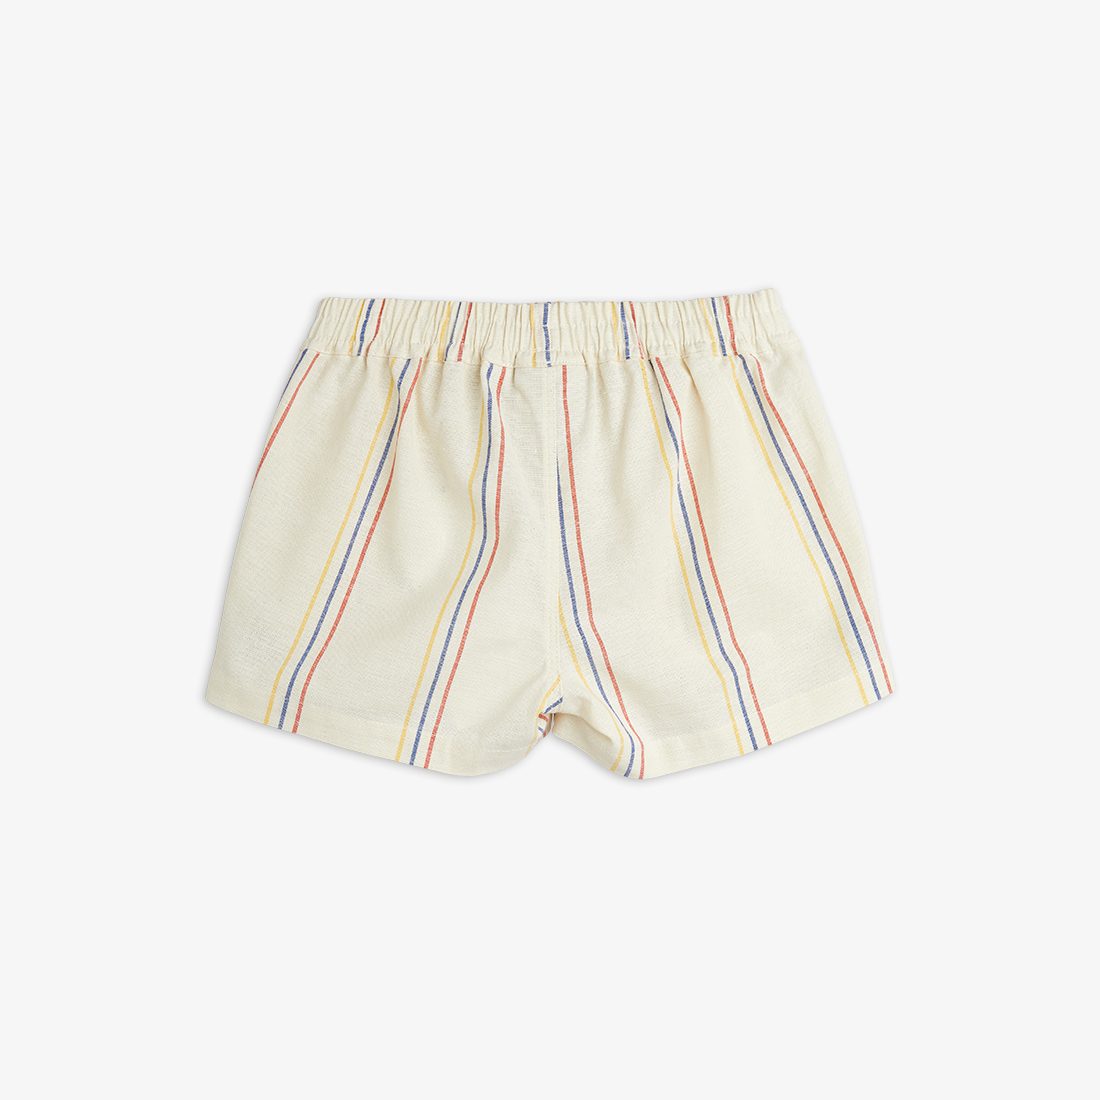 Mini Rodini - Stripe y/d woven shorts, Offwhite